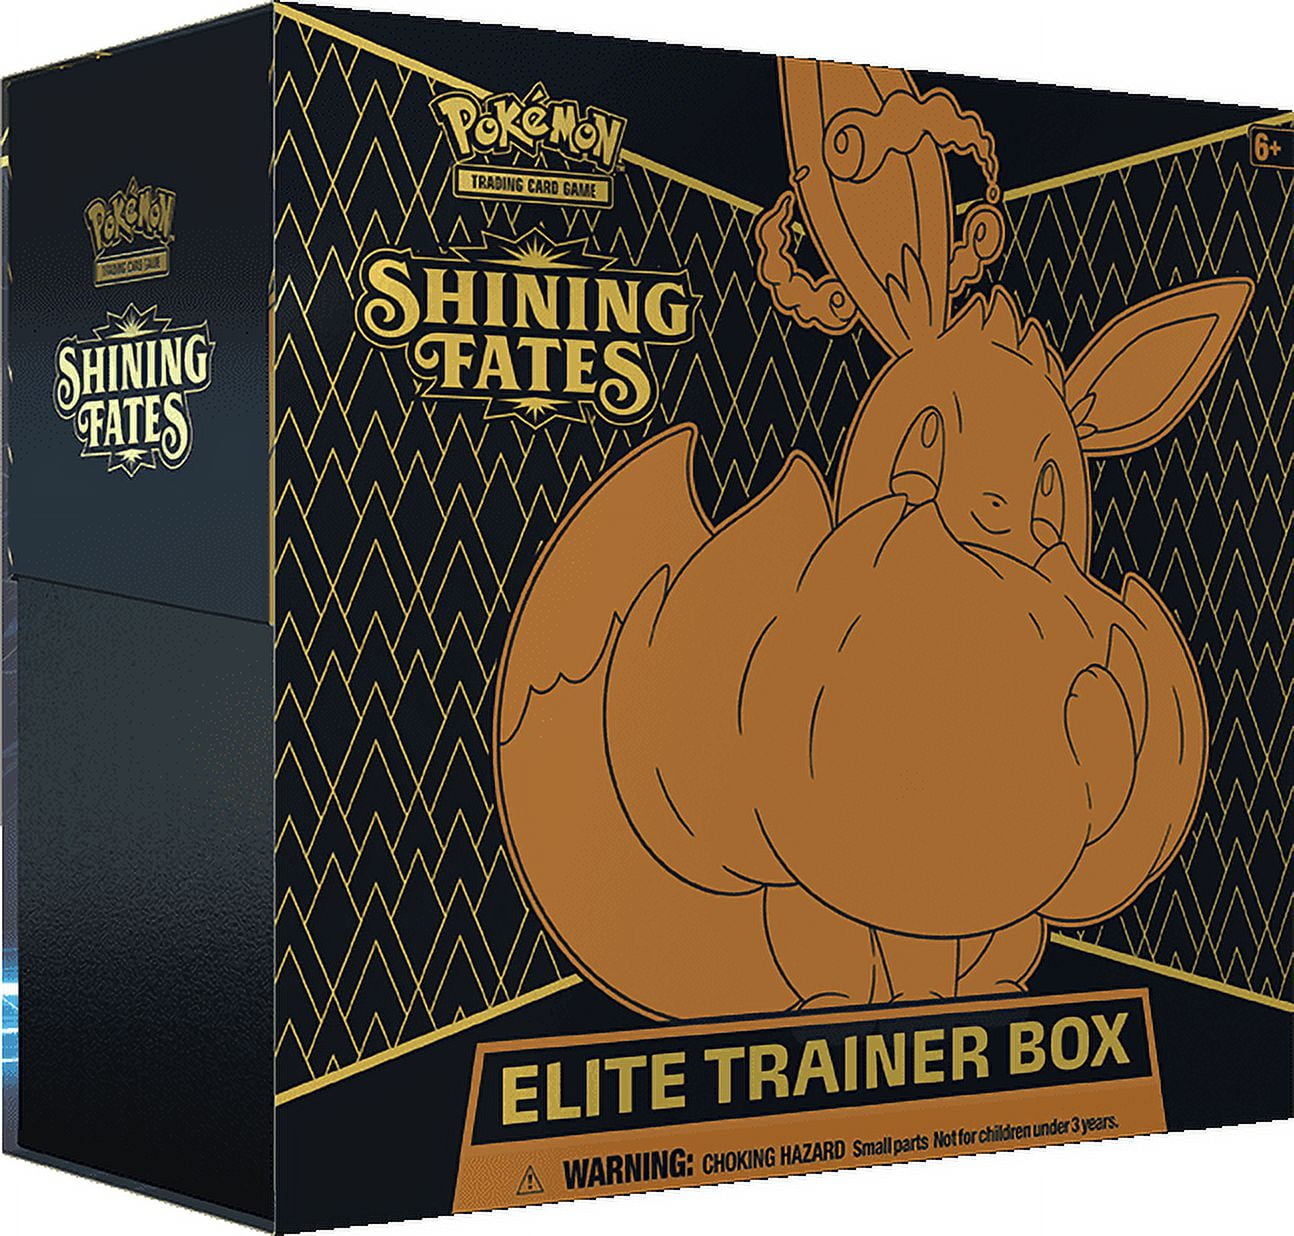 Pokemon Trading Card Game: Sword and Shield Brilliant Stars Elite Trainer  Box